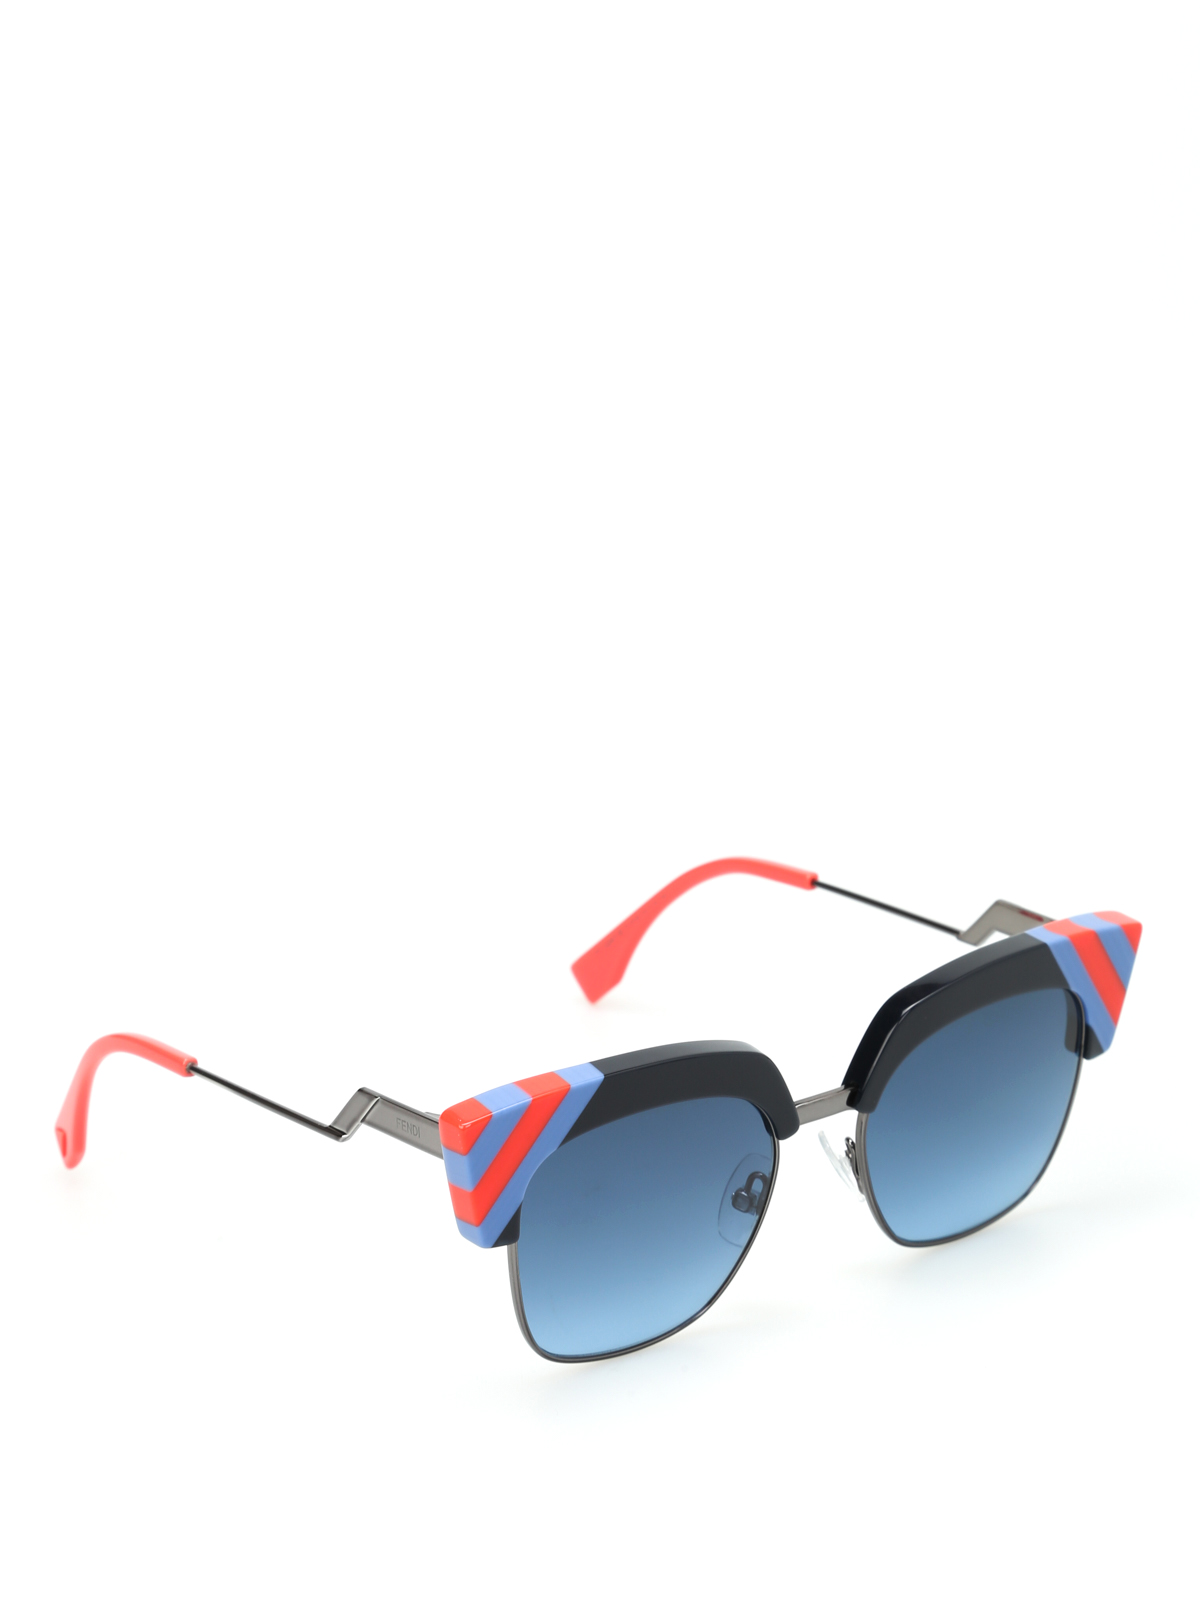 fendi waves sunglasses